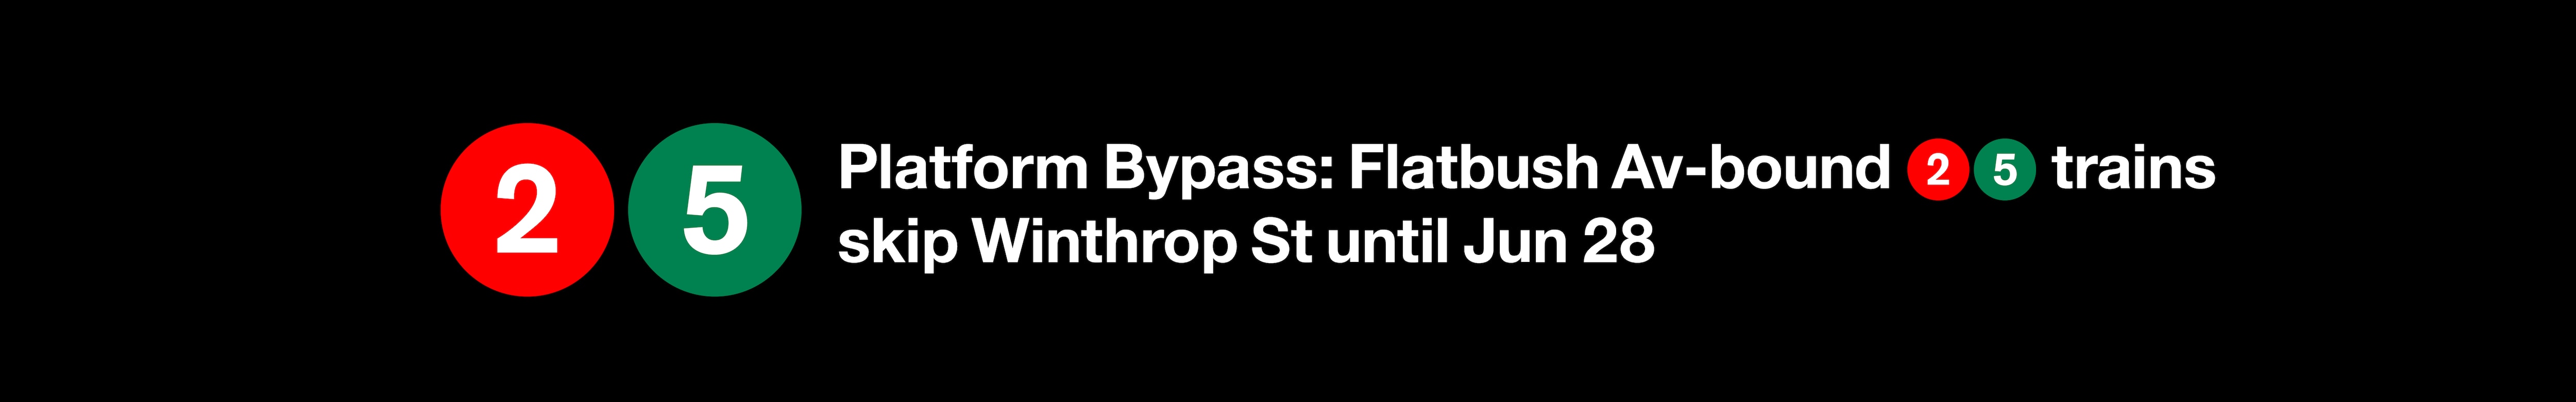 Flatbush Avenue-bound 2 5 trains skip Winthrop St until June 28